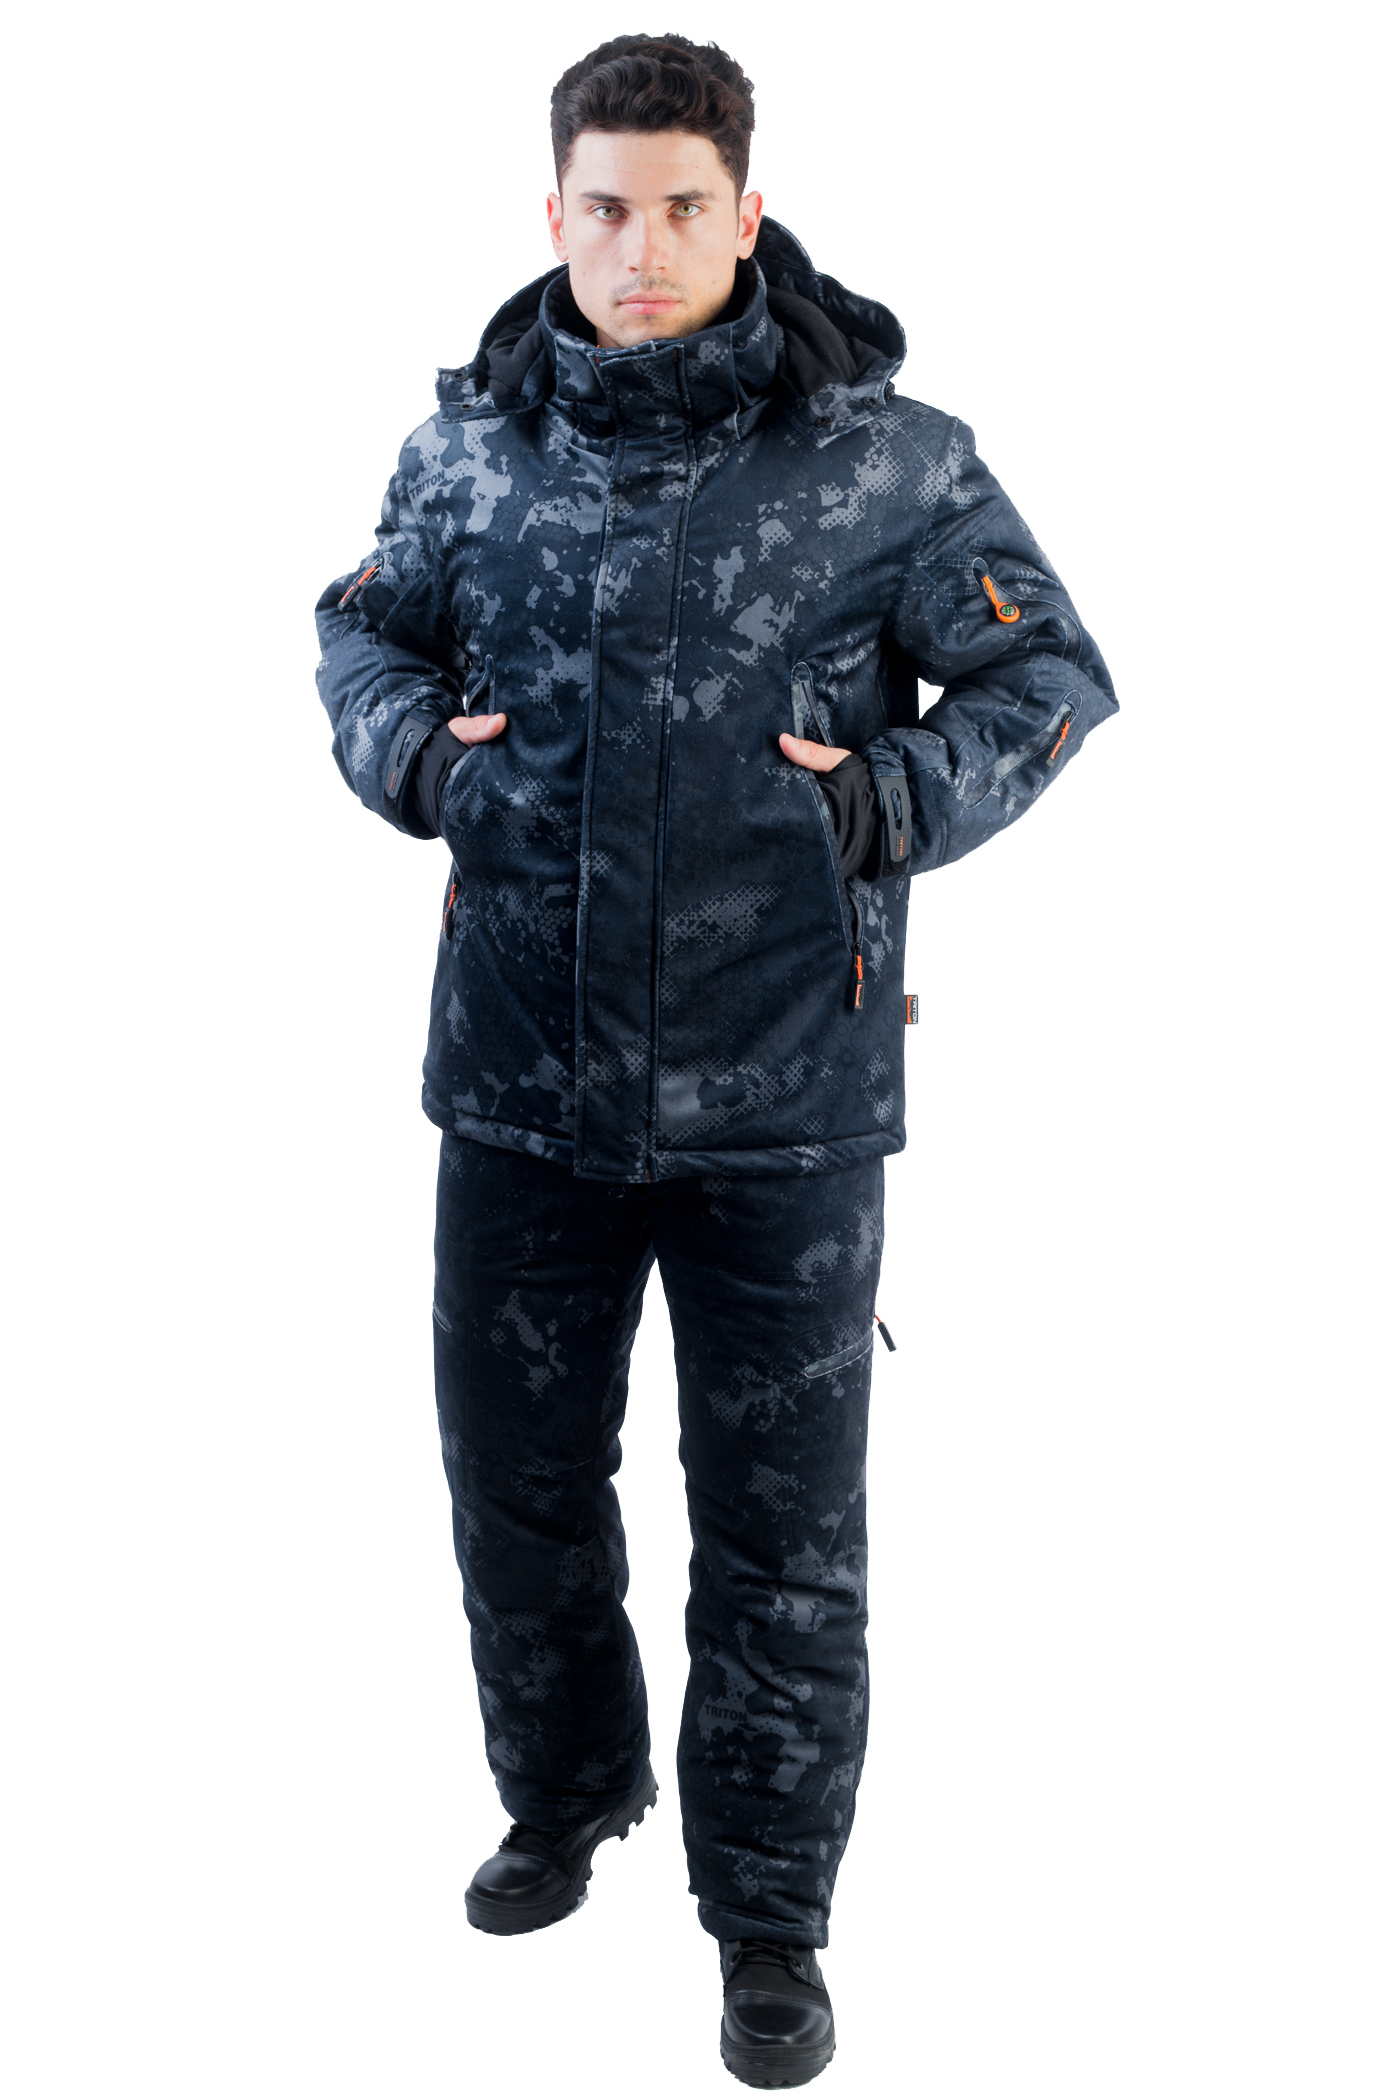 фото Зимний костюм для рыбалки и охоты TRITON Тритон PRO -15 (Вельбоа, Бежевый)